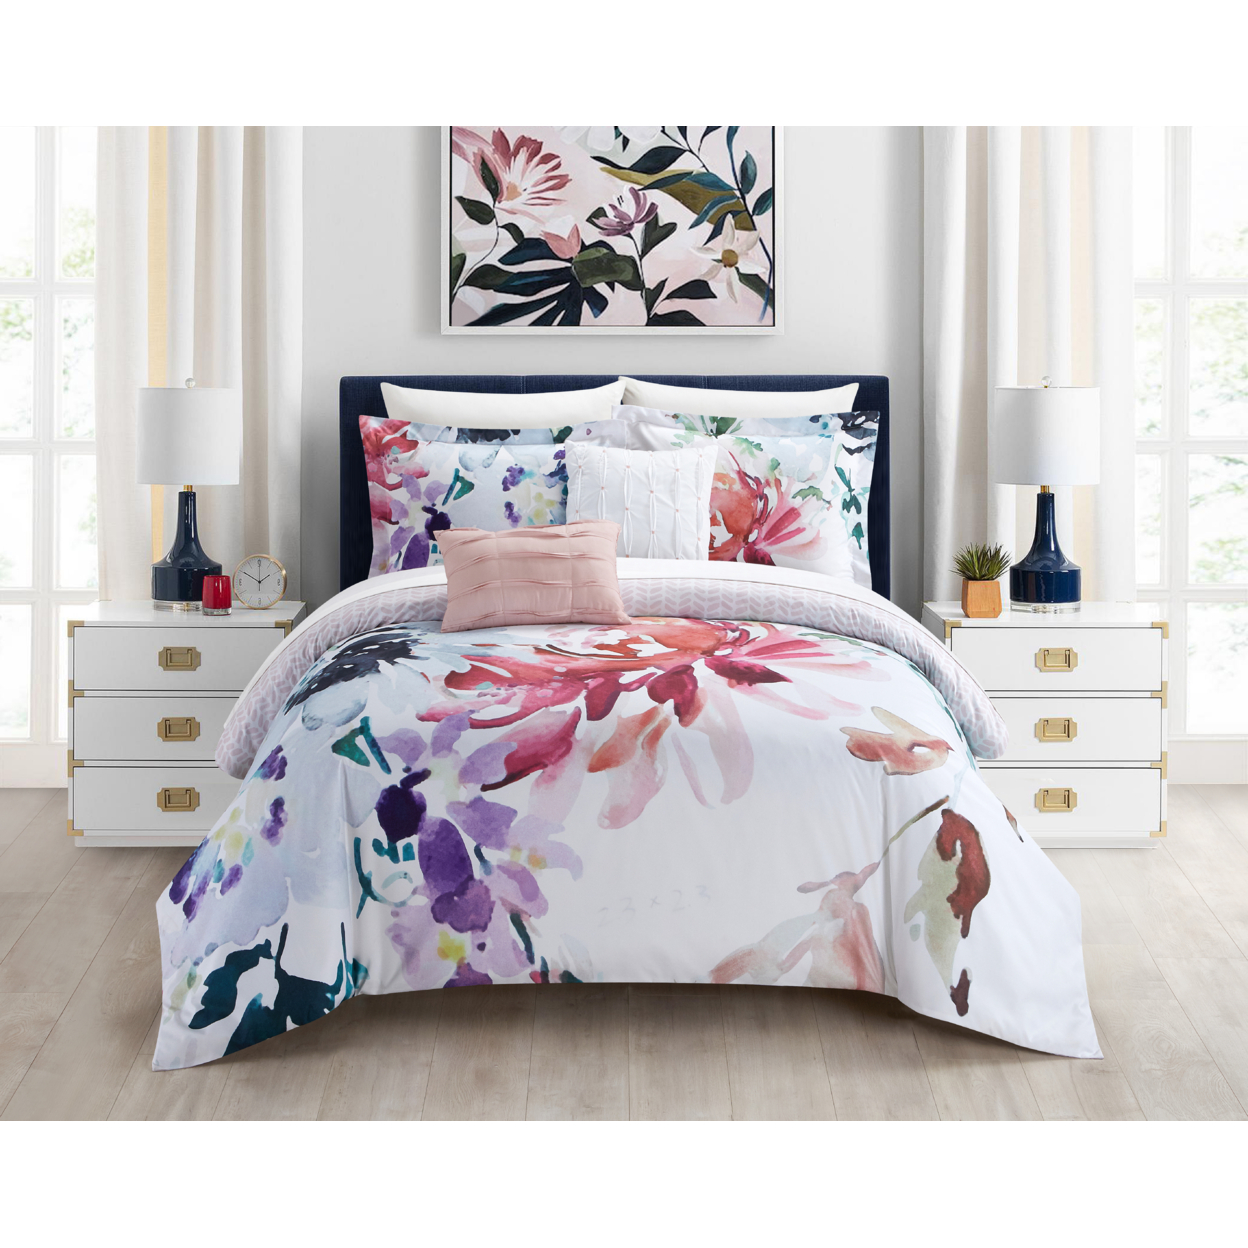 Victoria 5 Piece Reversible Comforter Set Floral Watercolor Design Bedding - Victoria Purple, Twin